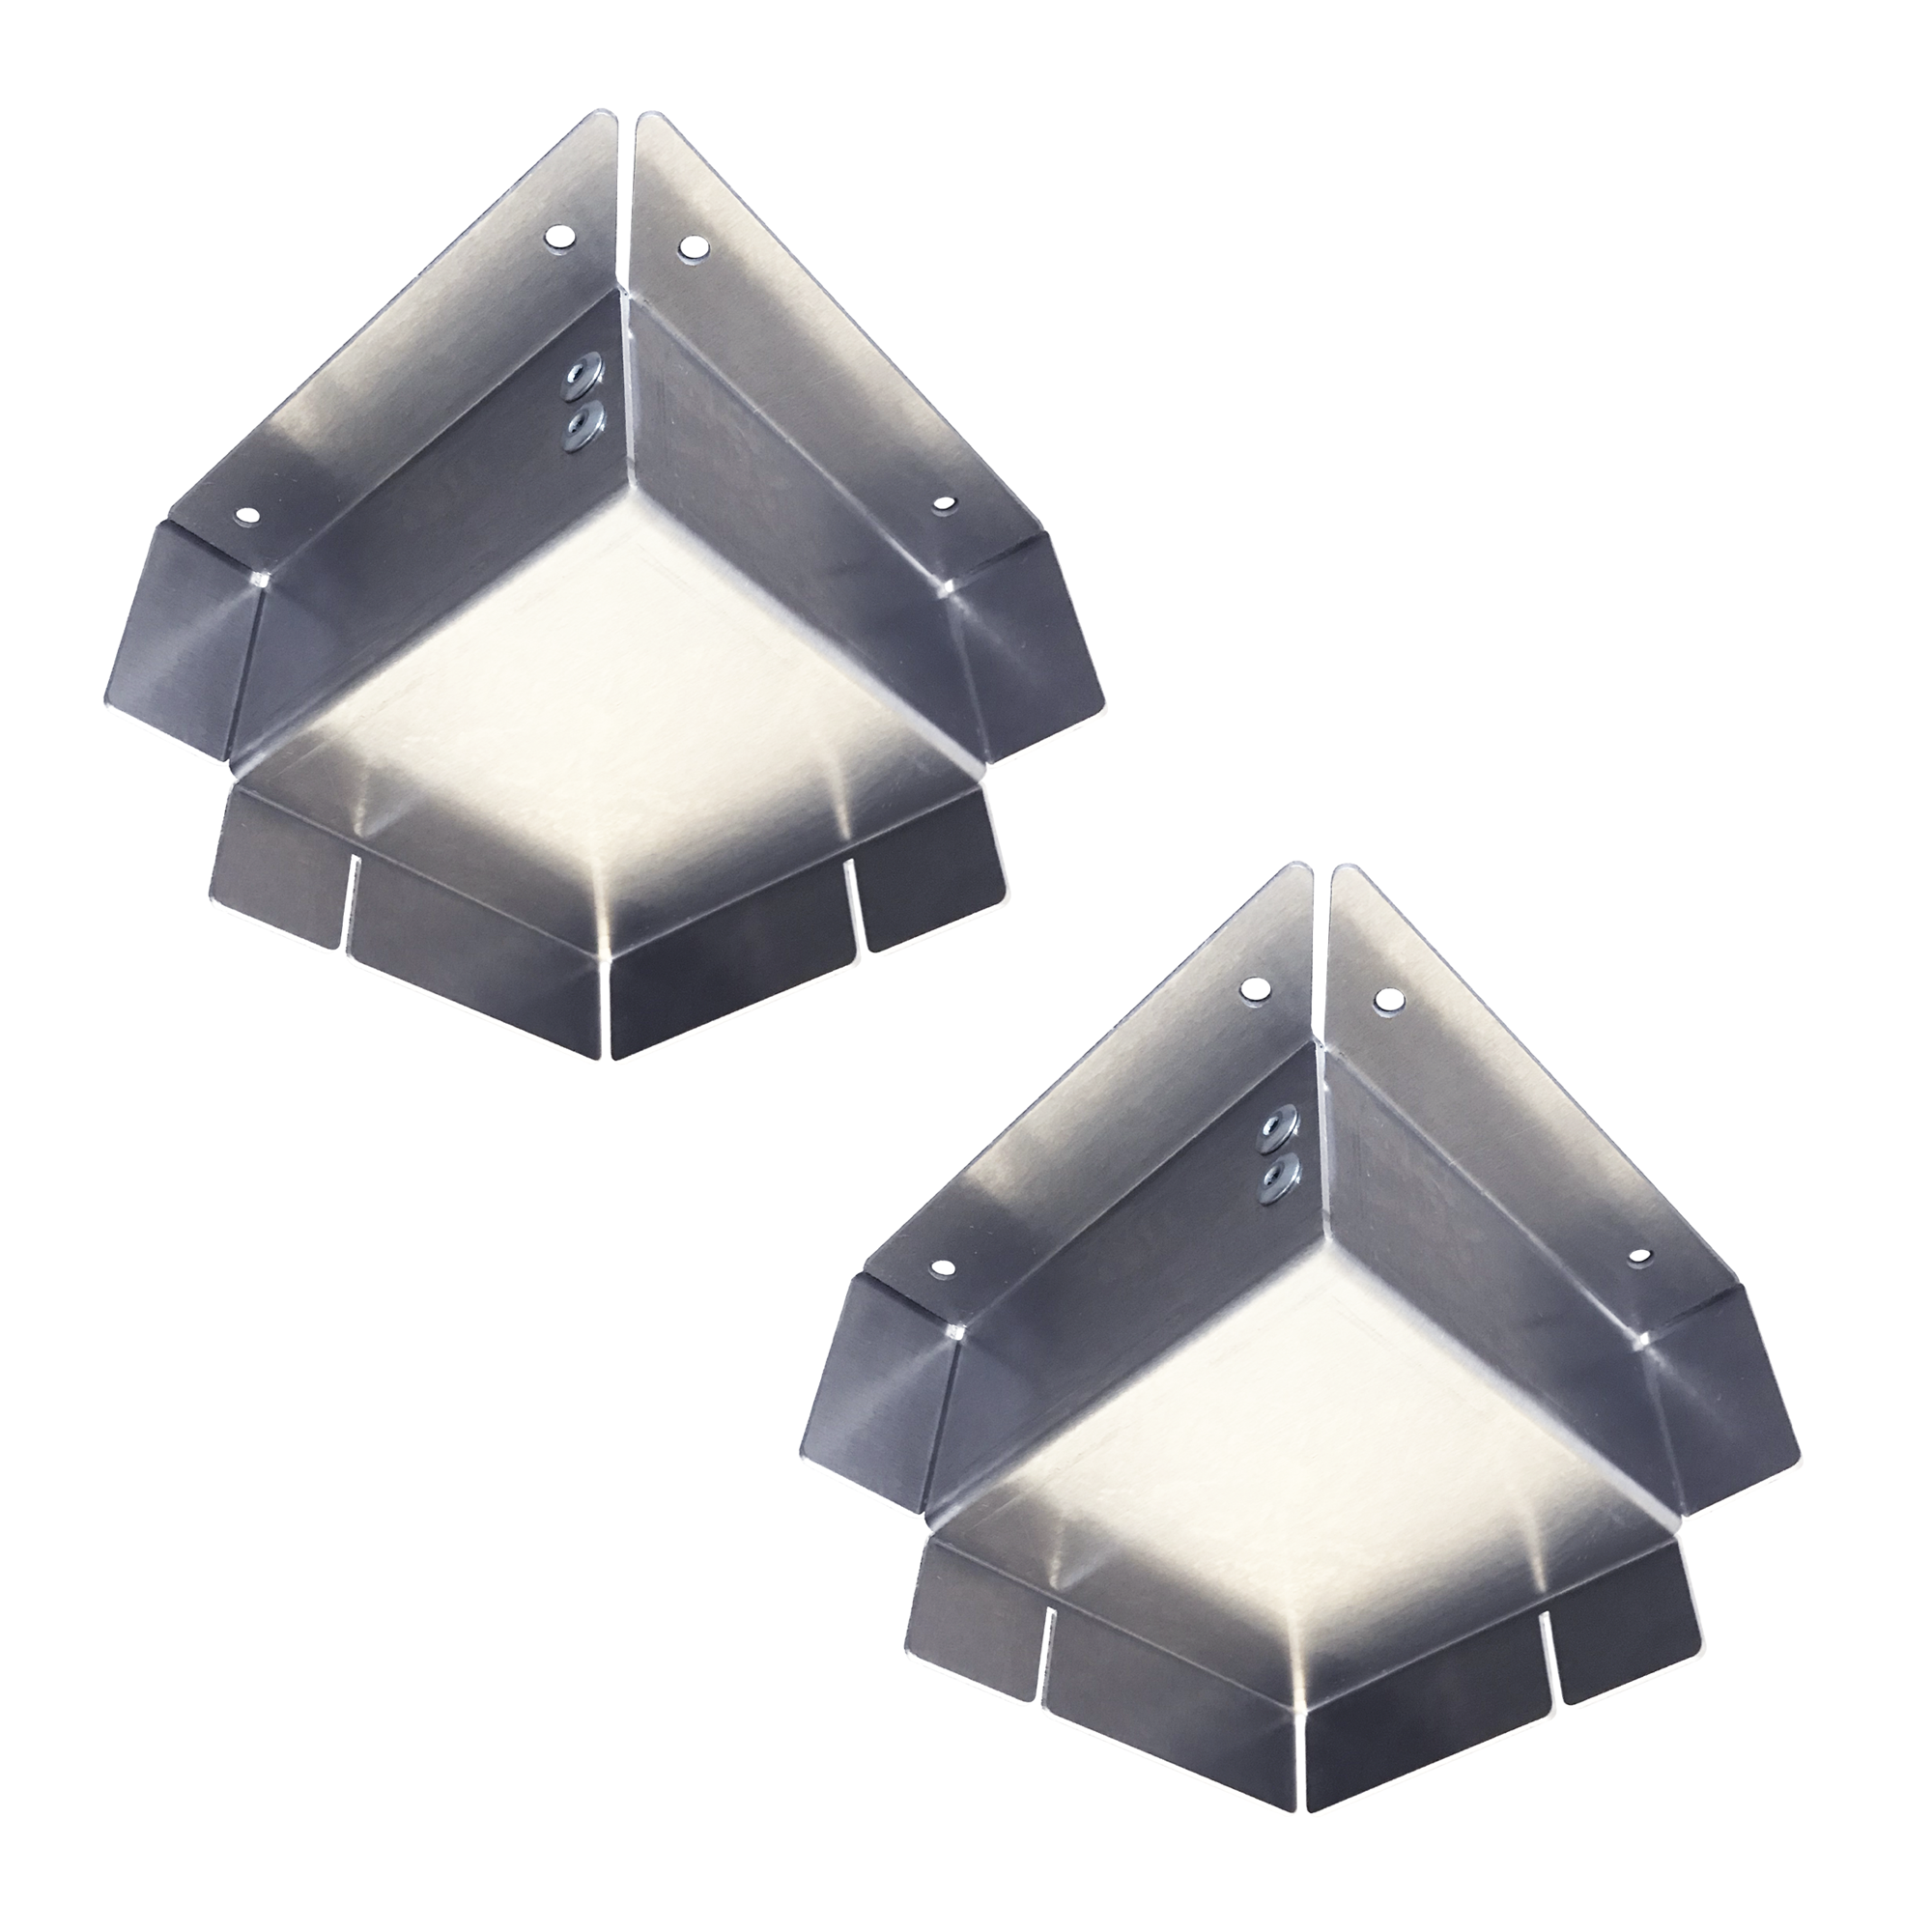 2 Corner Casting Covers For Steel Stud Framing (Steel Stud Brackets Not Included)